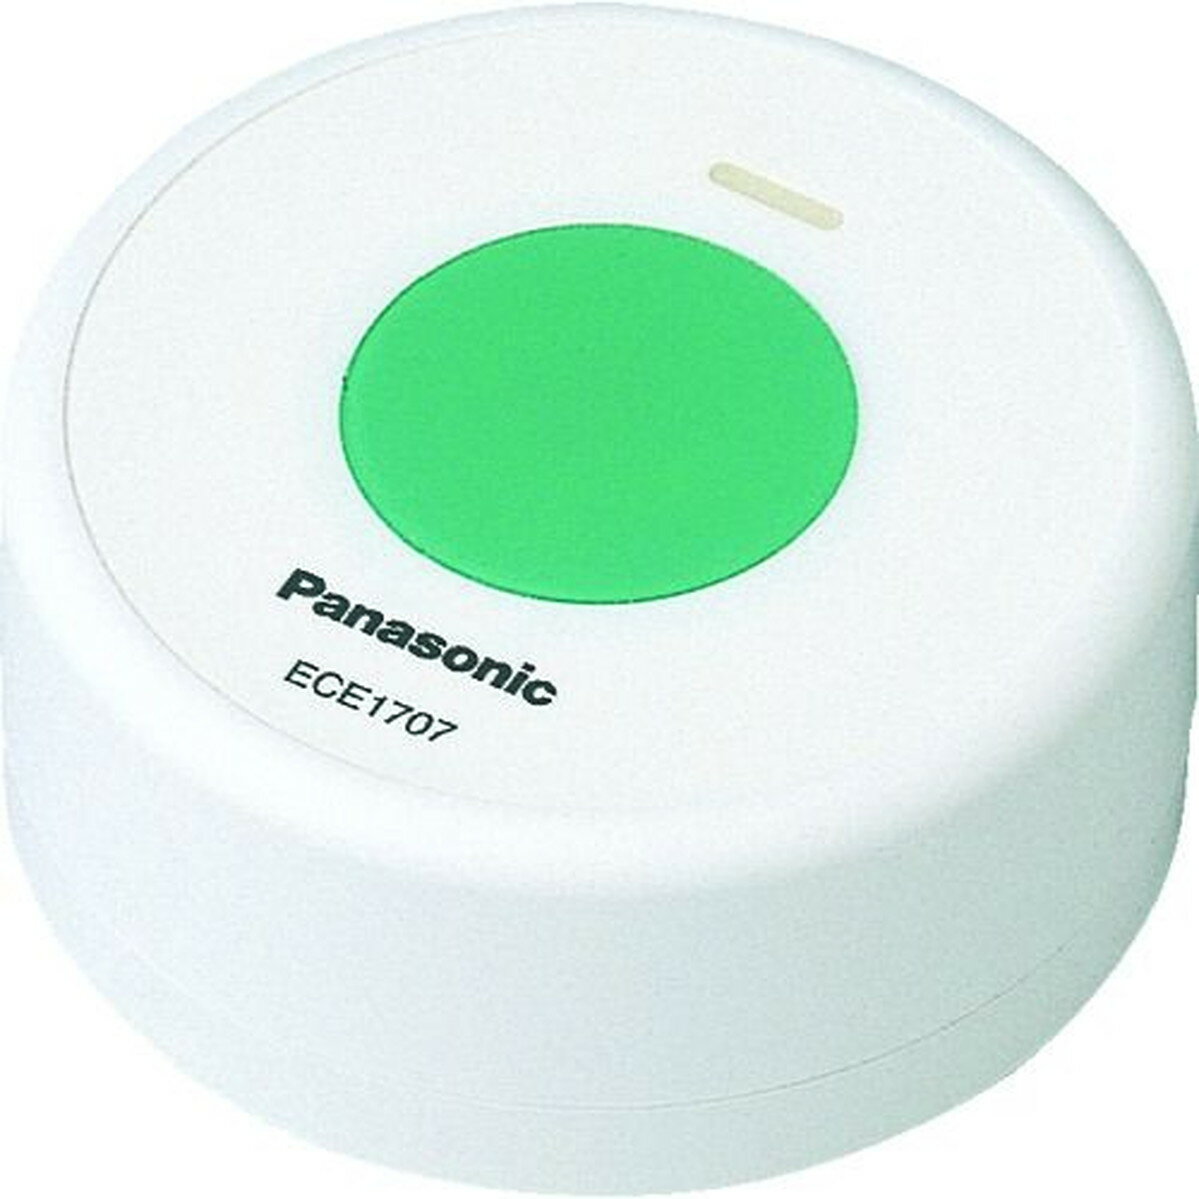 Panasonic 小電力型ワイヤレス 卓上発信器 1個 (ECE1707P)